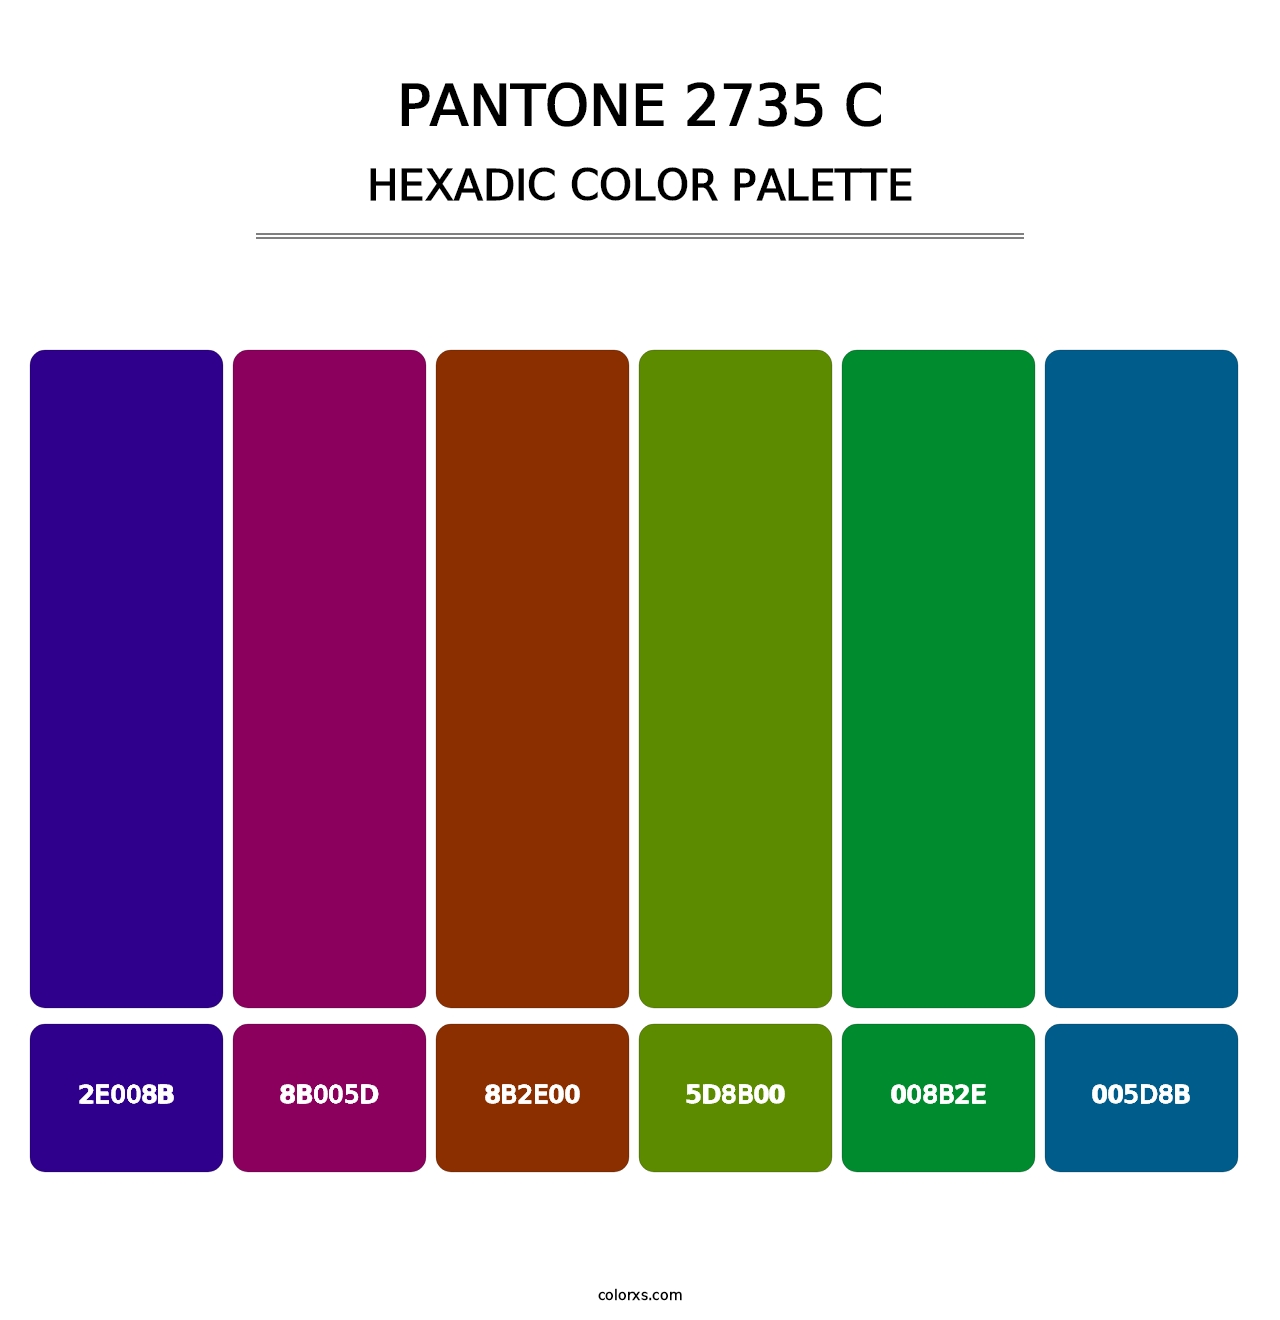 PANTONE 2735 C - Hexadic Color Palette